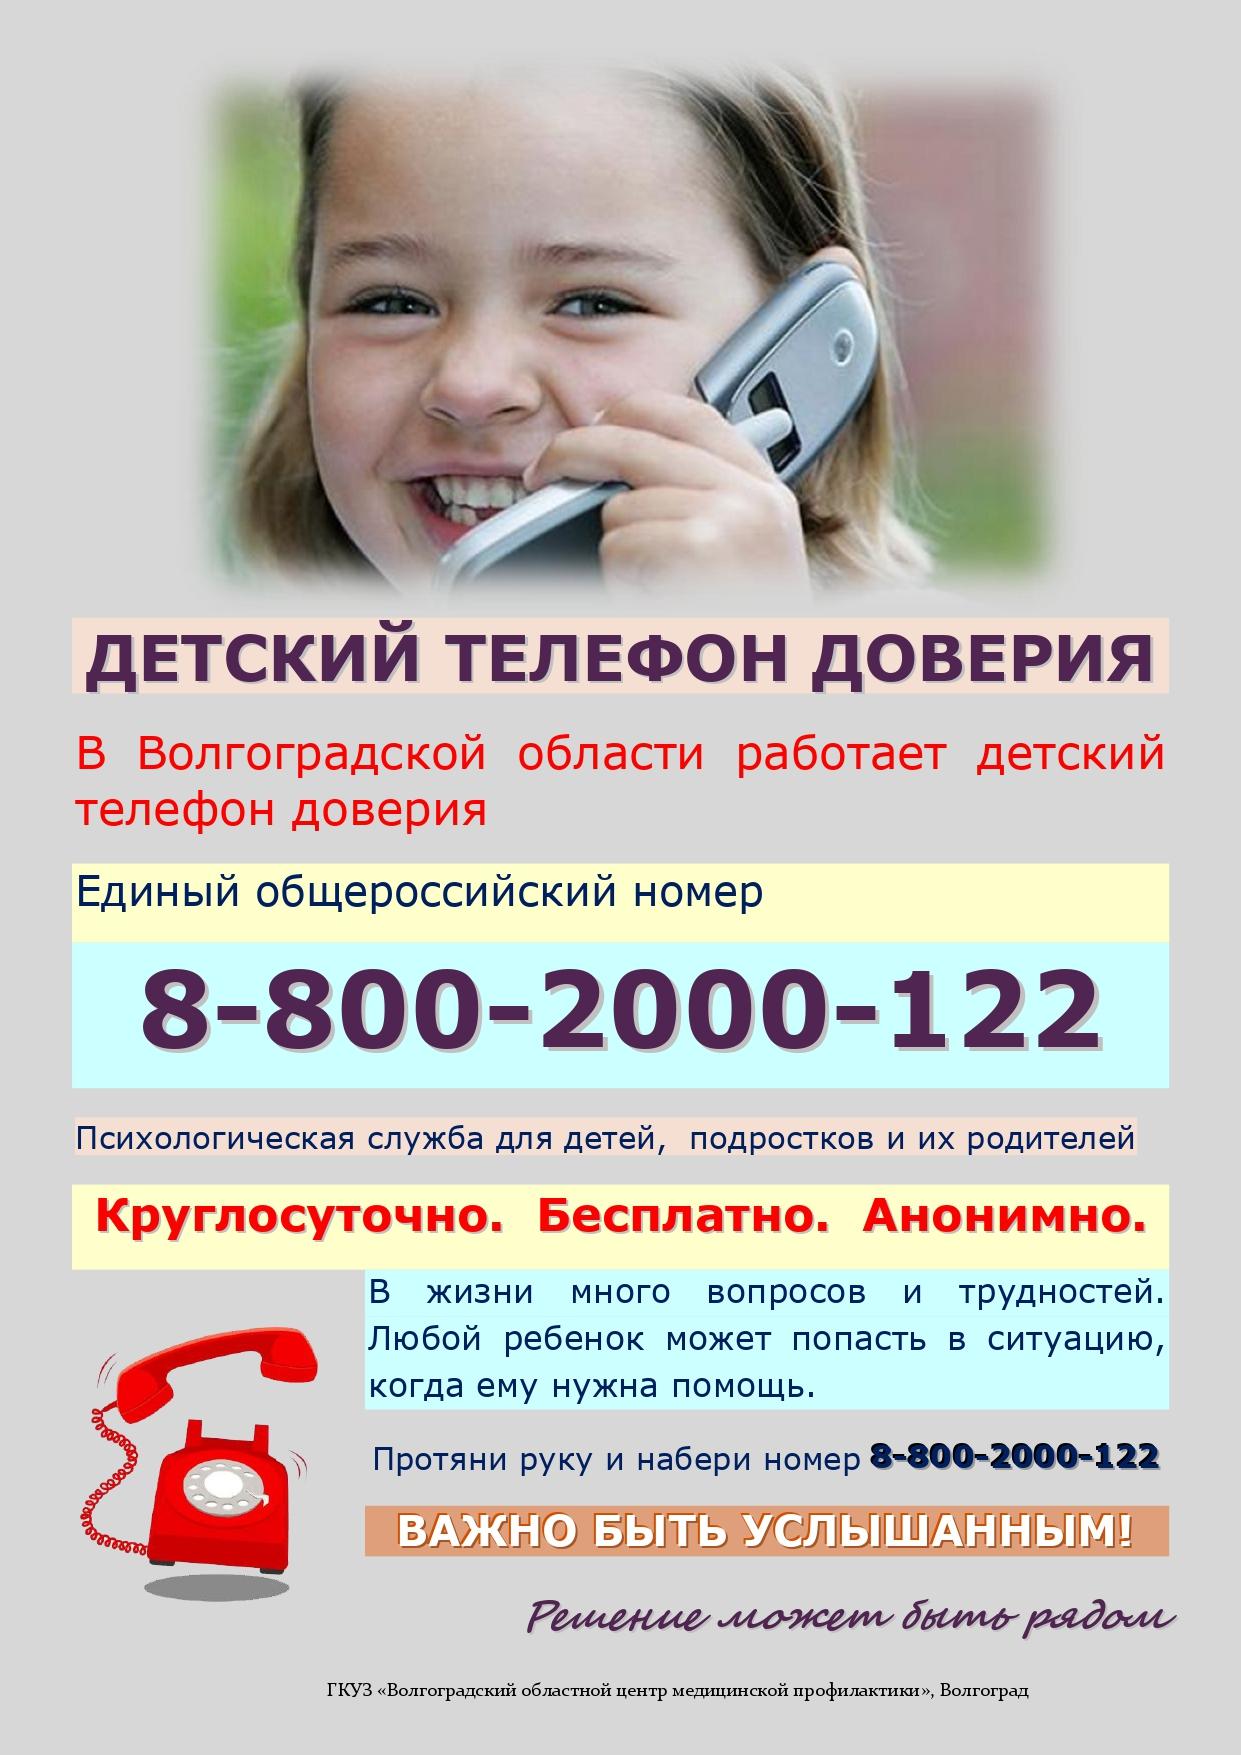 Детский телефон доверия_page-0001.jpg